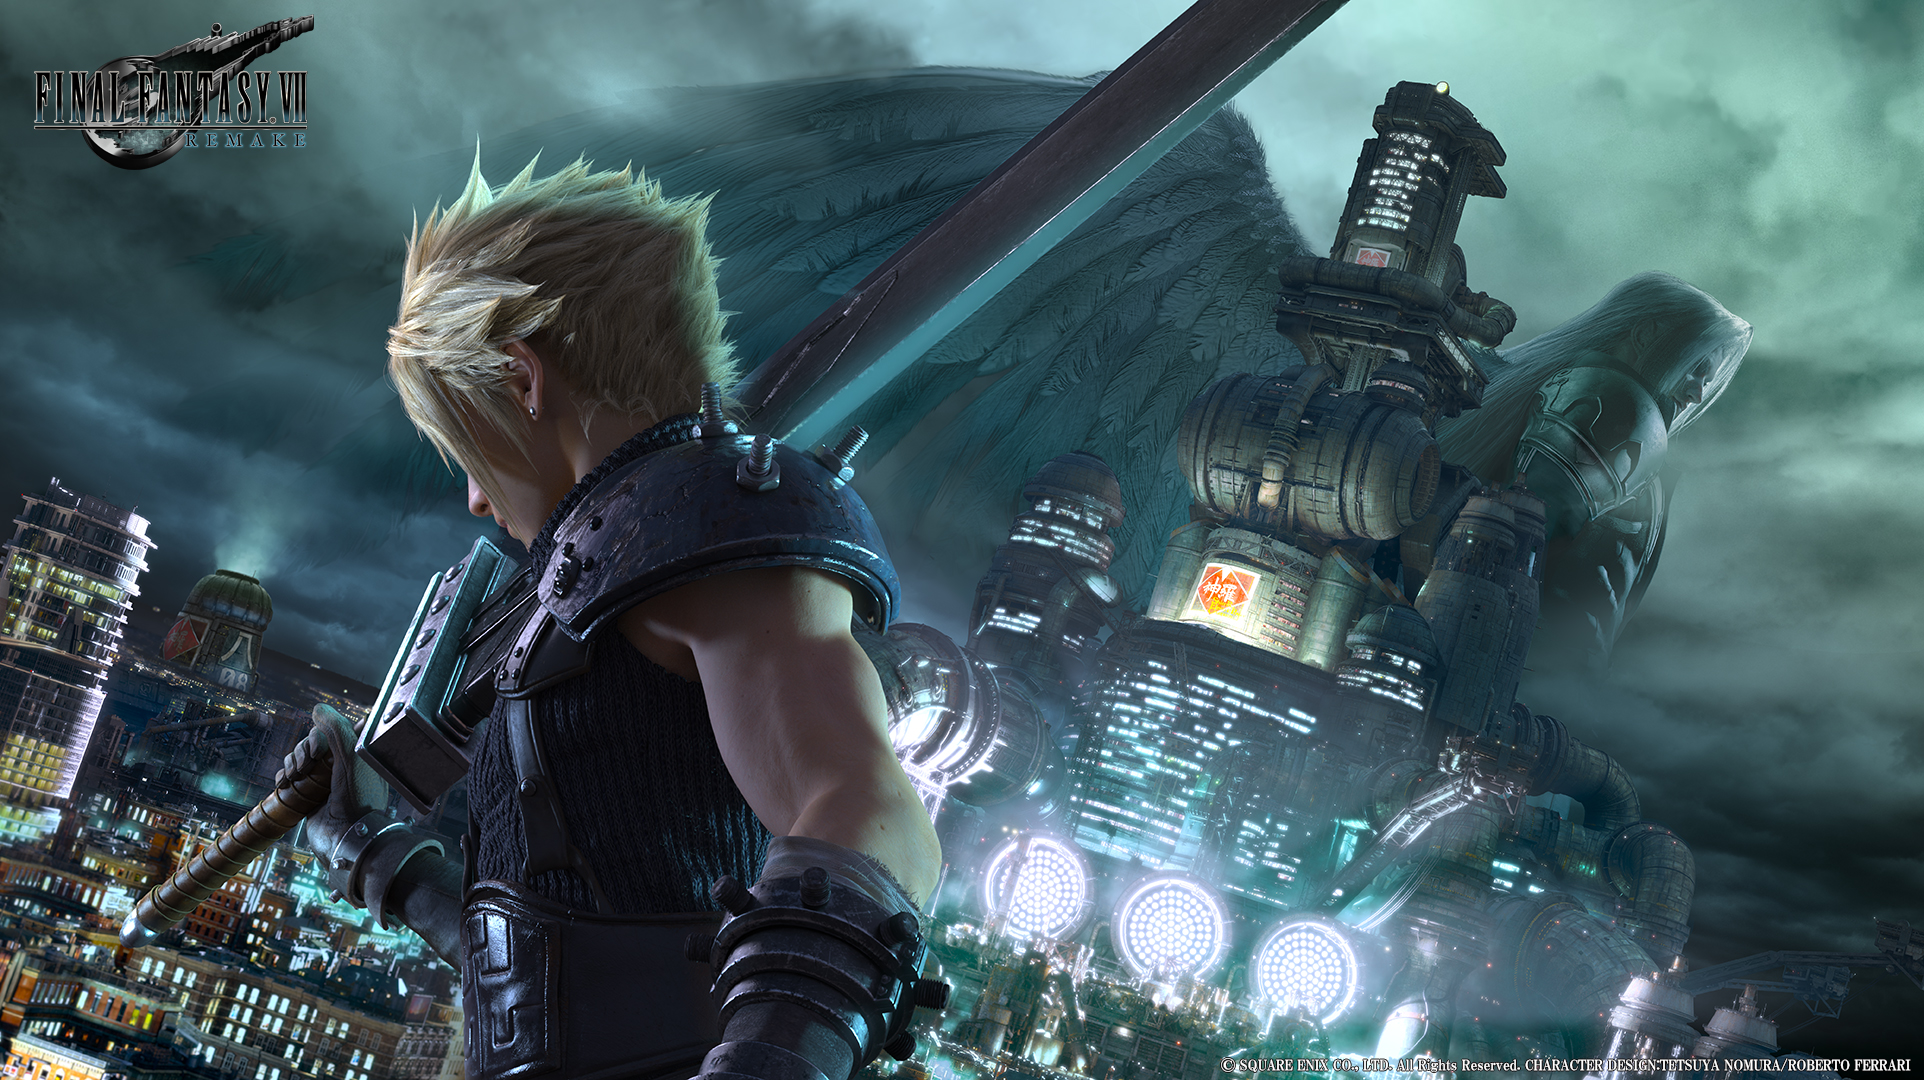 Final Fantasy VII Remake key visual unveiled